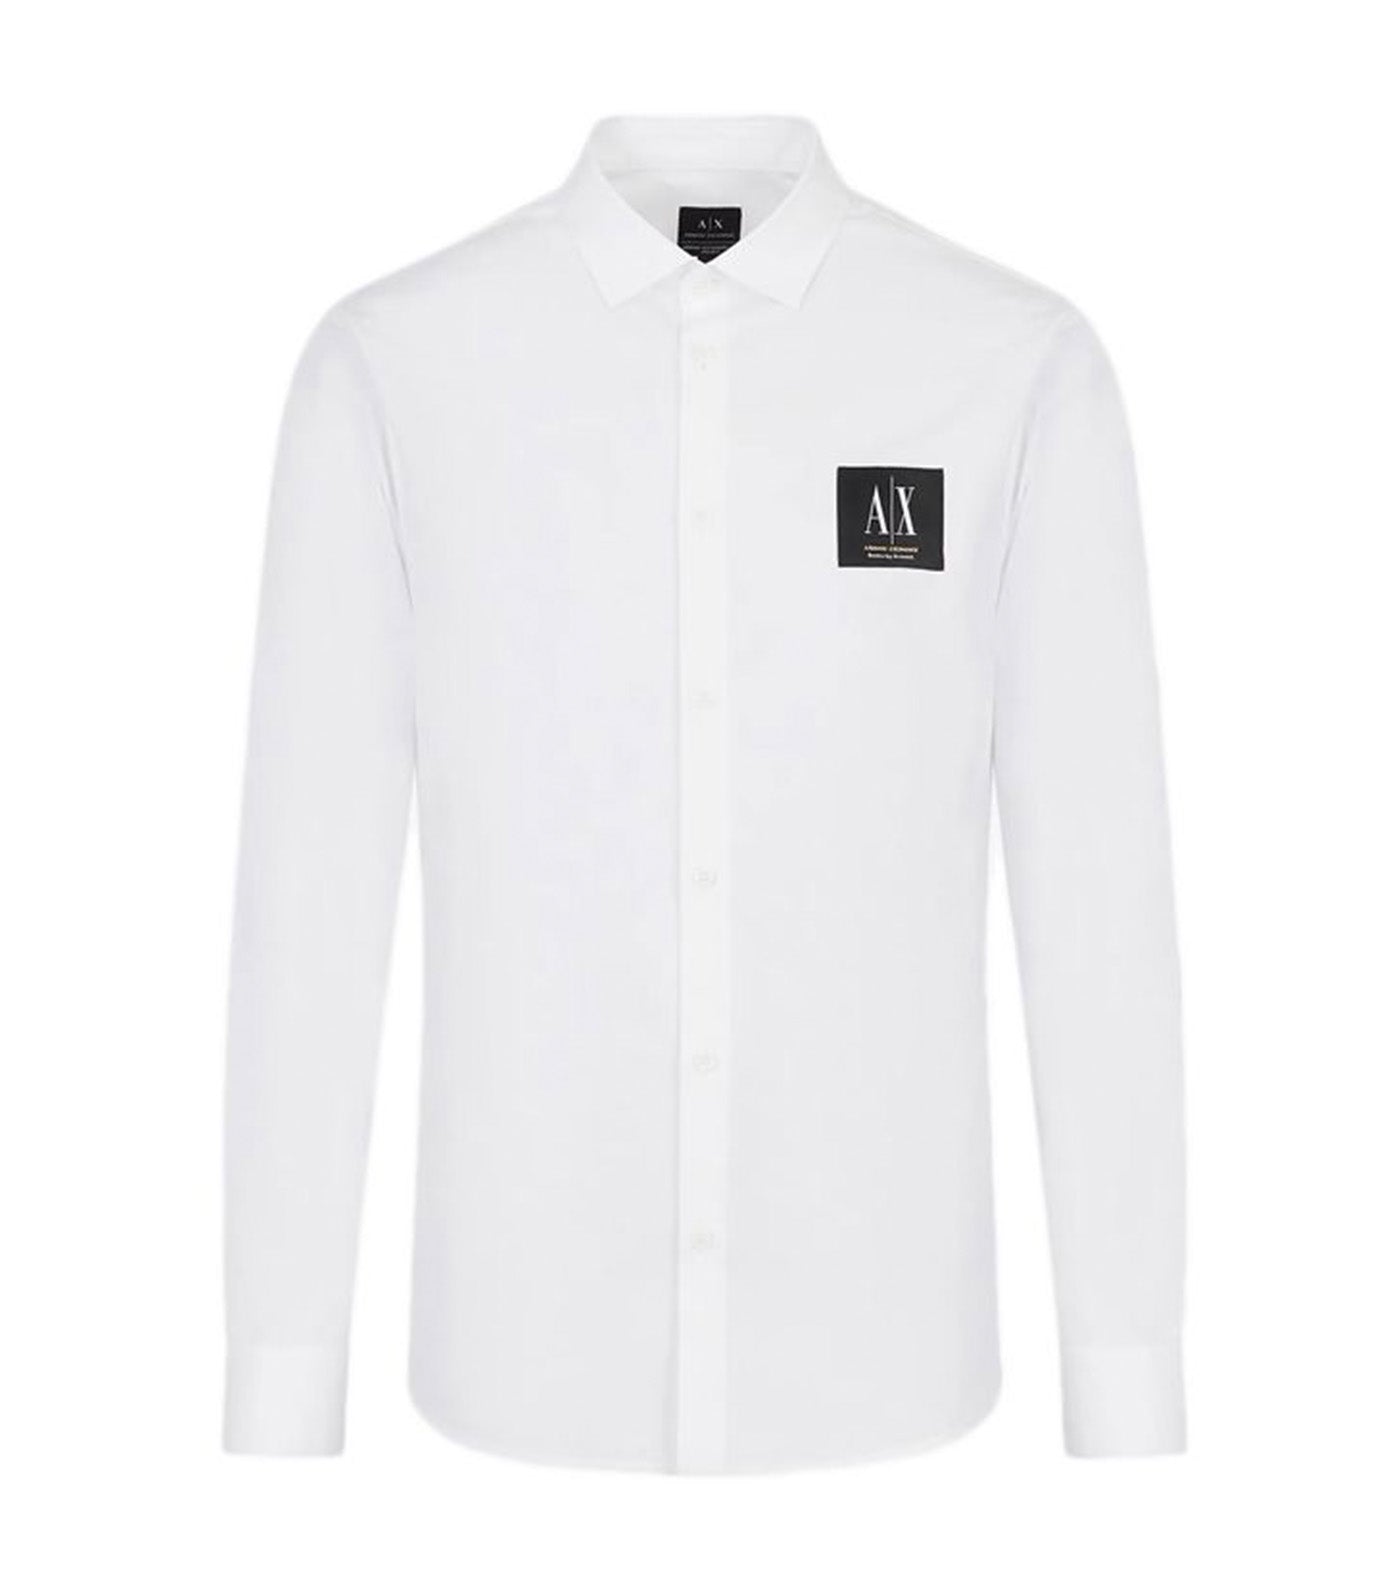 Basics By Armani Organic Cotton Poplin Shirt White